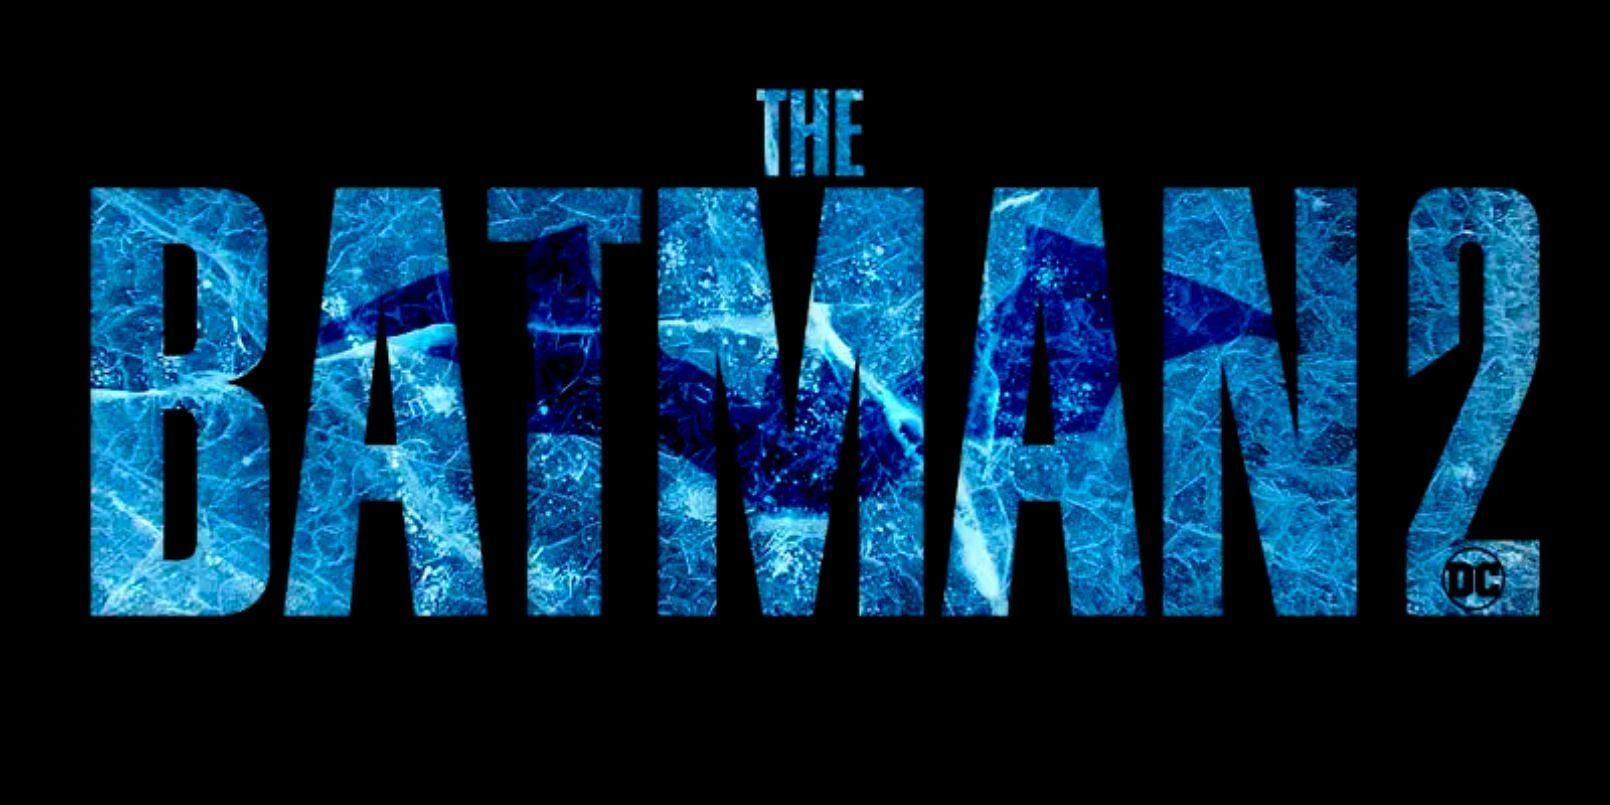 Official title artwork for The Batman 2